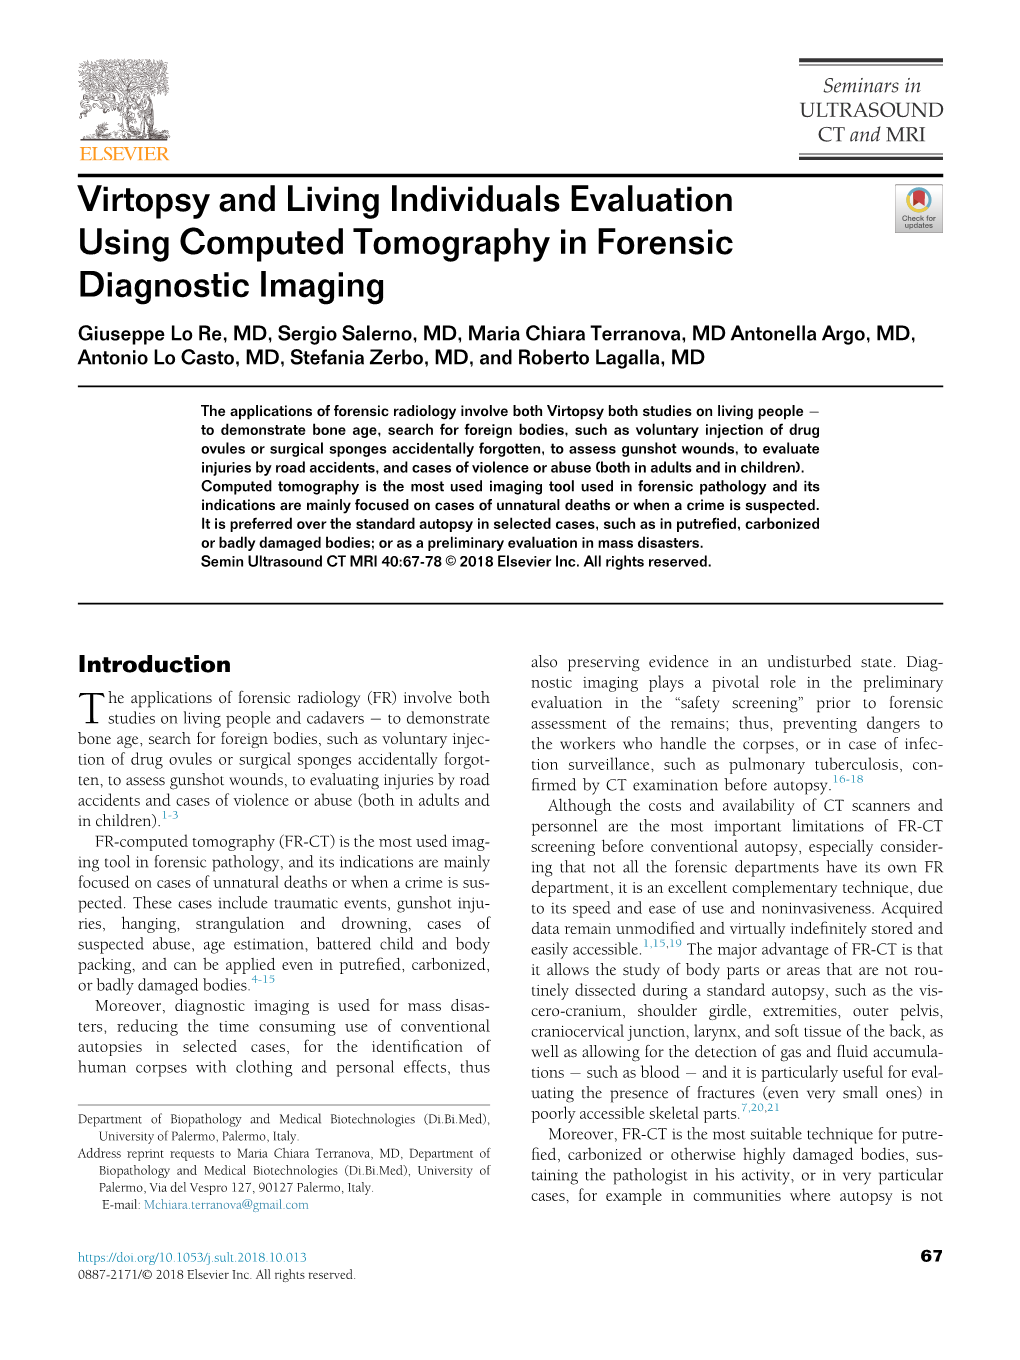 Virtopsy and Living Individuals Evaluation Using Computed